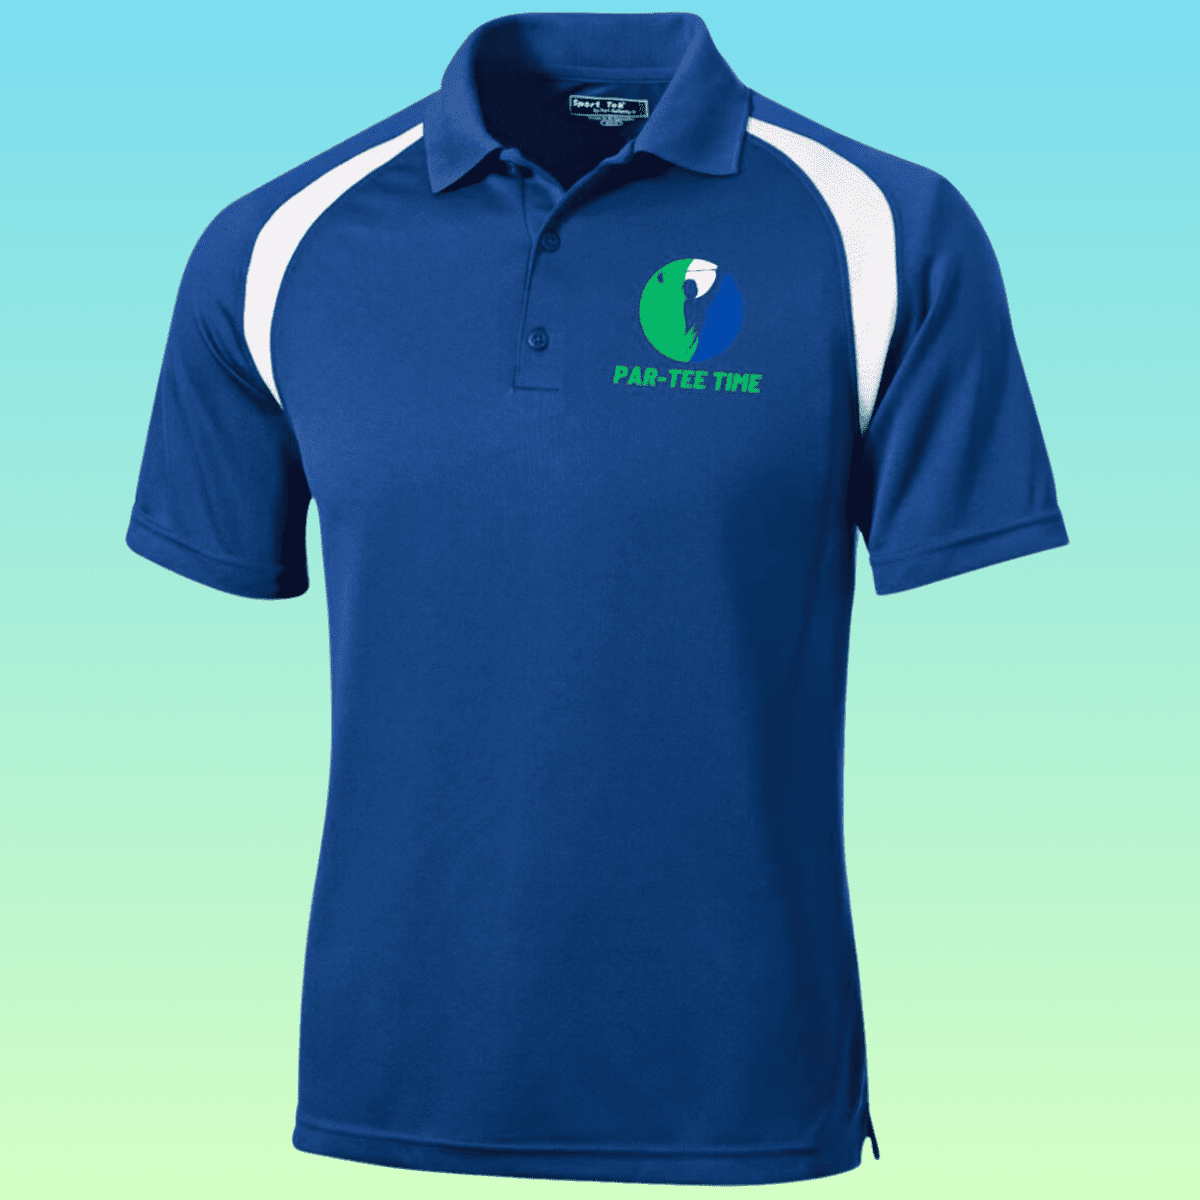 Men's Royal and White Golf Par-tee Time Moisture-Wicking Polo Shirt